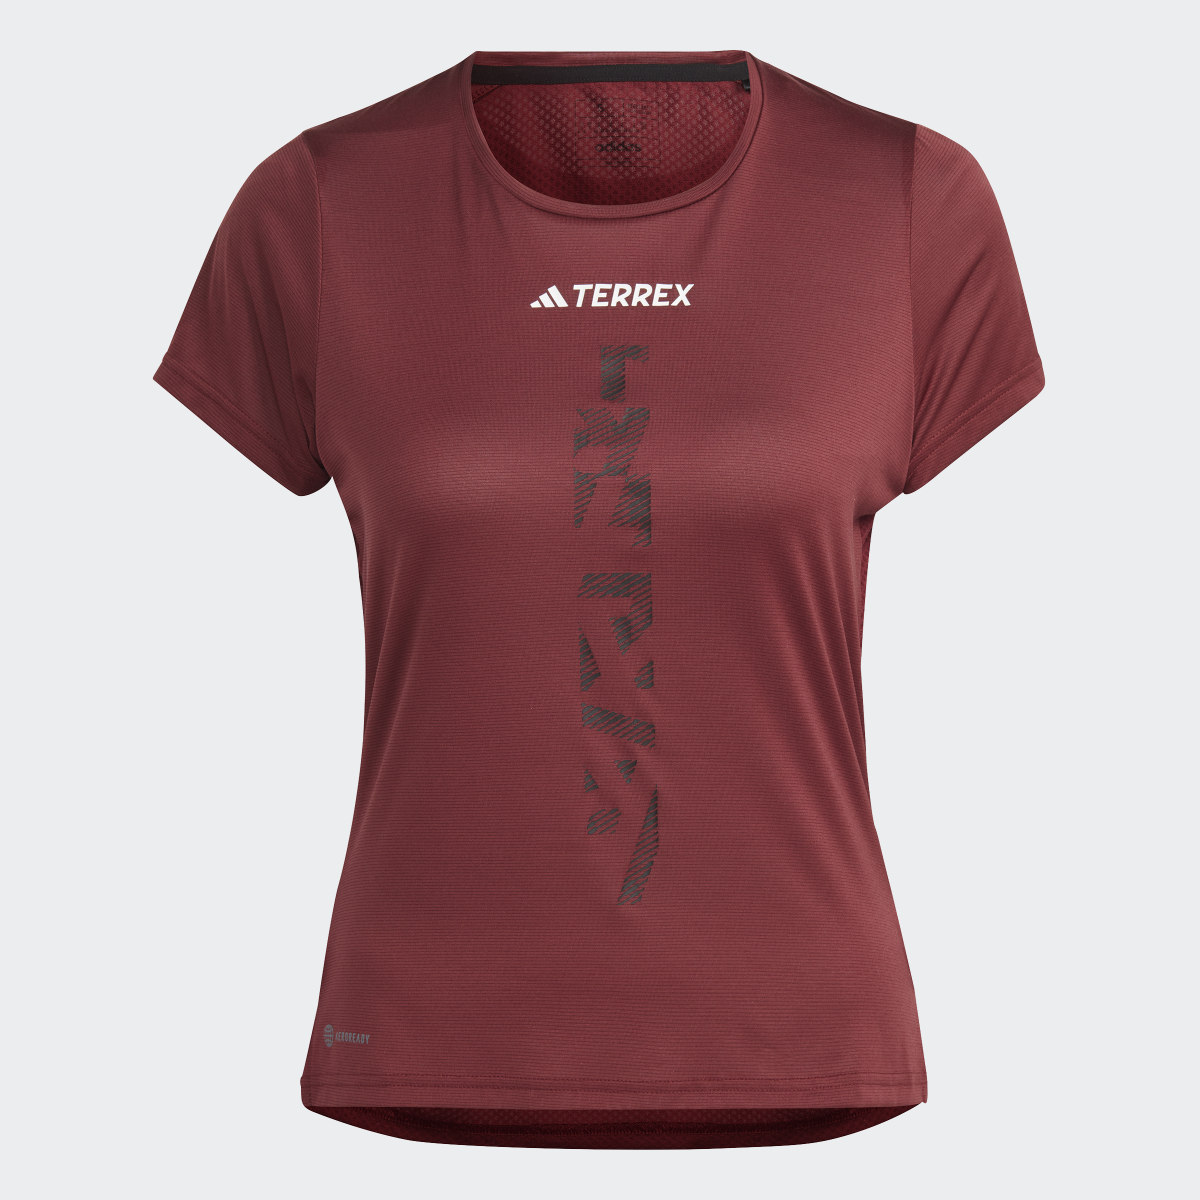 Adidas Terrex Agravic Trail Running T-Shirt. 5